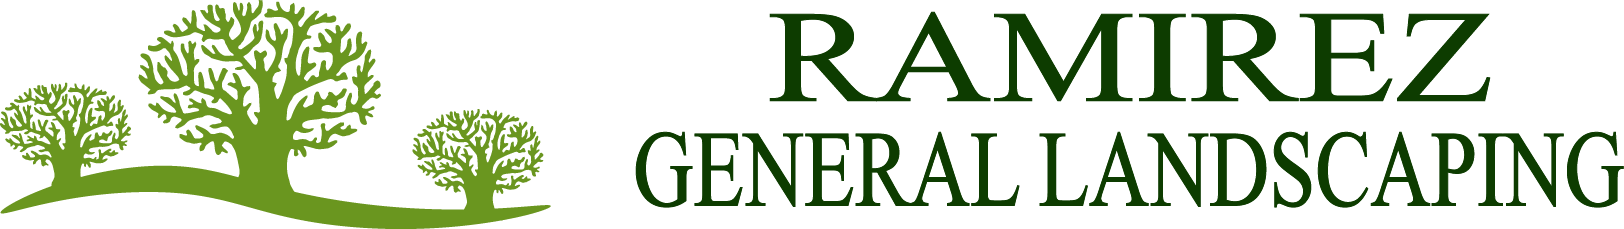 Ramirez Landscaping Service